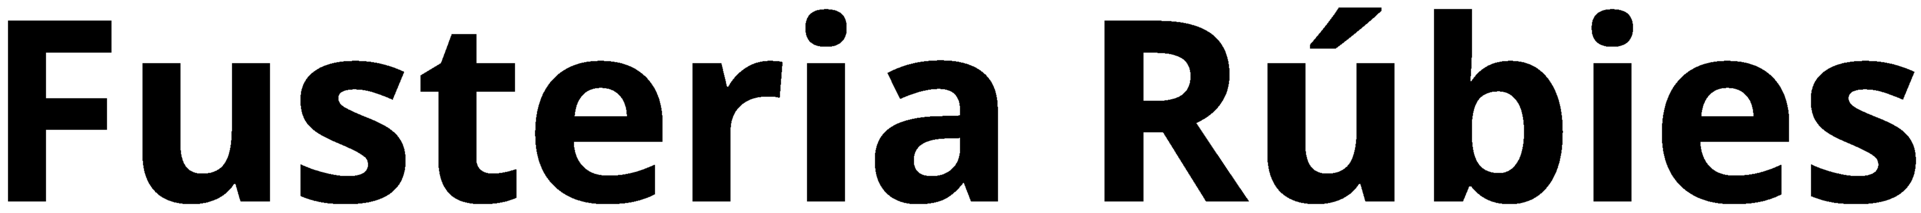 Fusteria Rúbies Logo